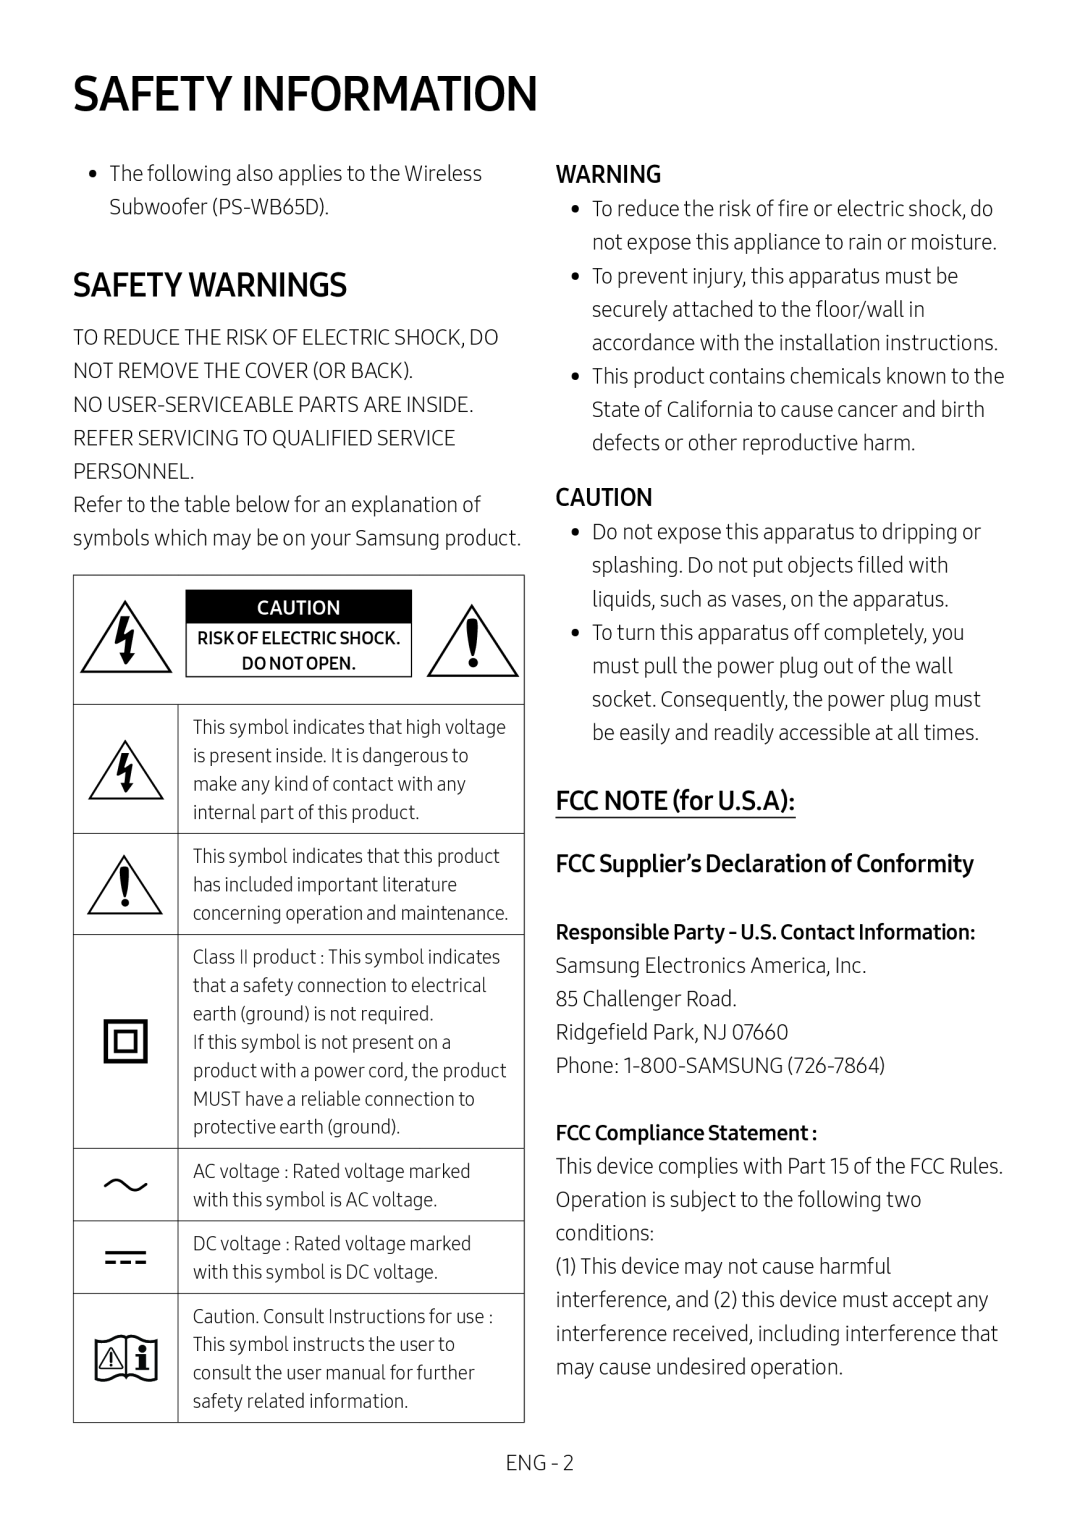 SAFETY WARNINGS Standard HW-B63M